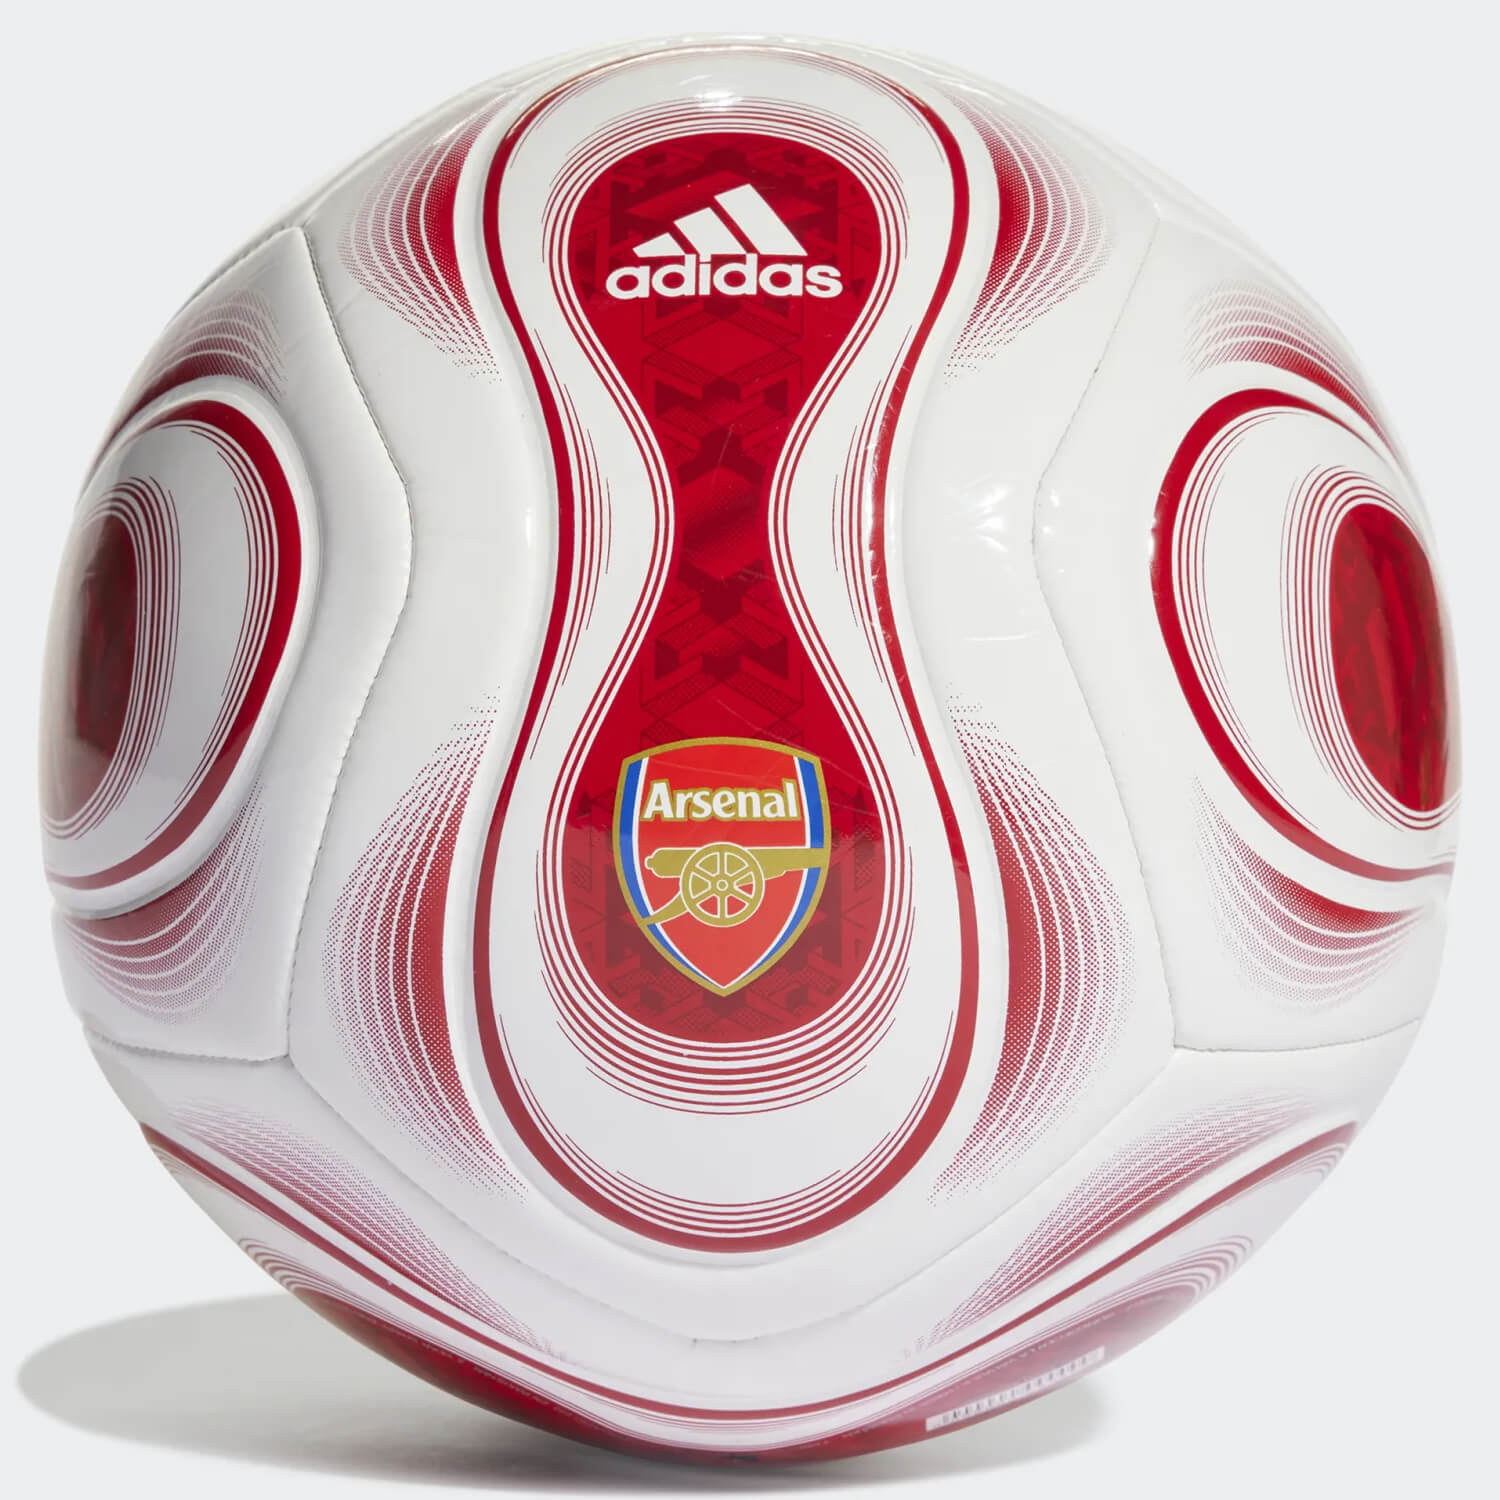 adidas 2022-23 Arsenal Home Club Ball - White-Scarlet (Front)